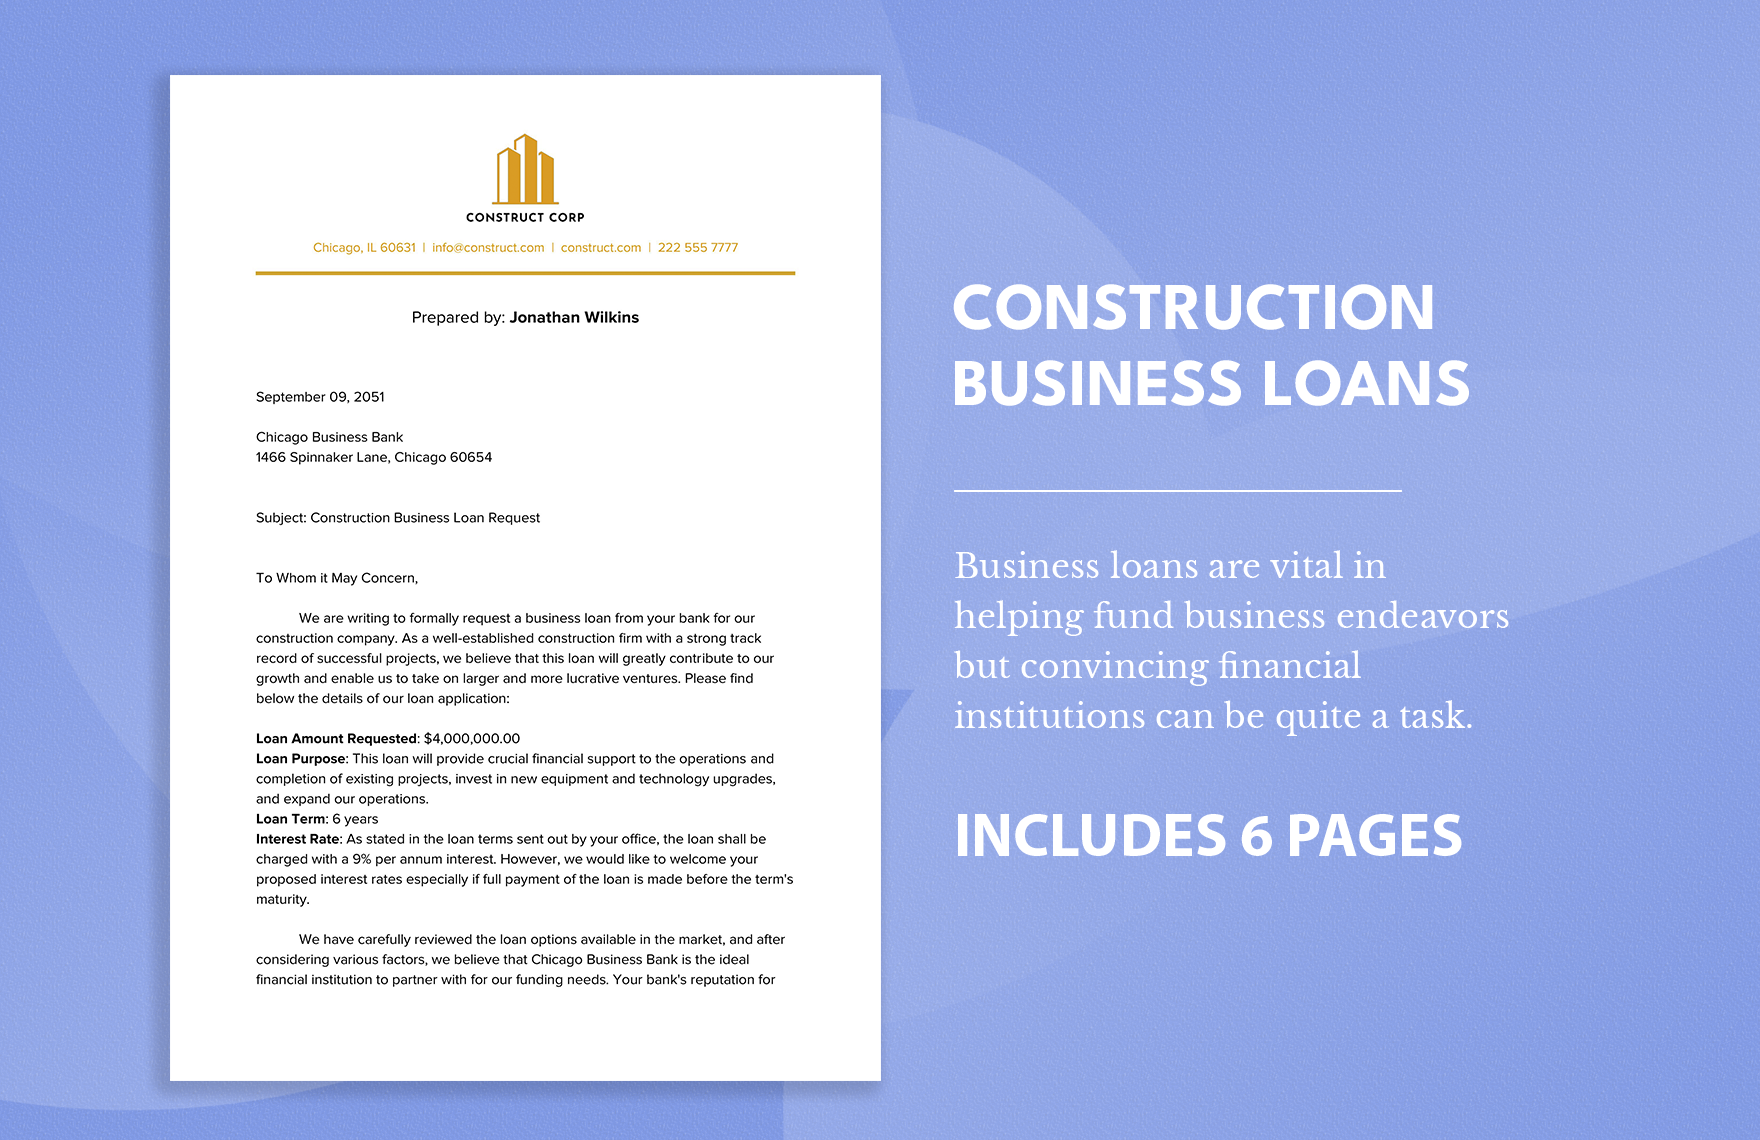 Construction Business Loans